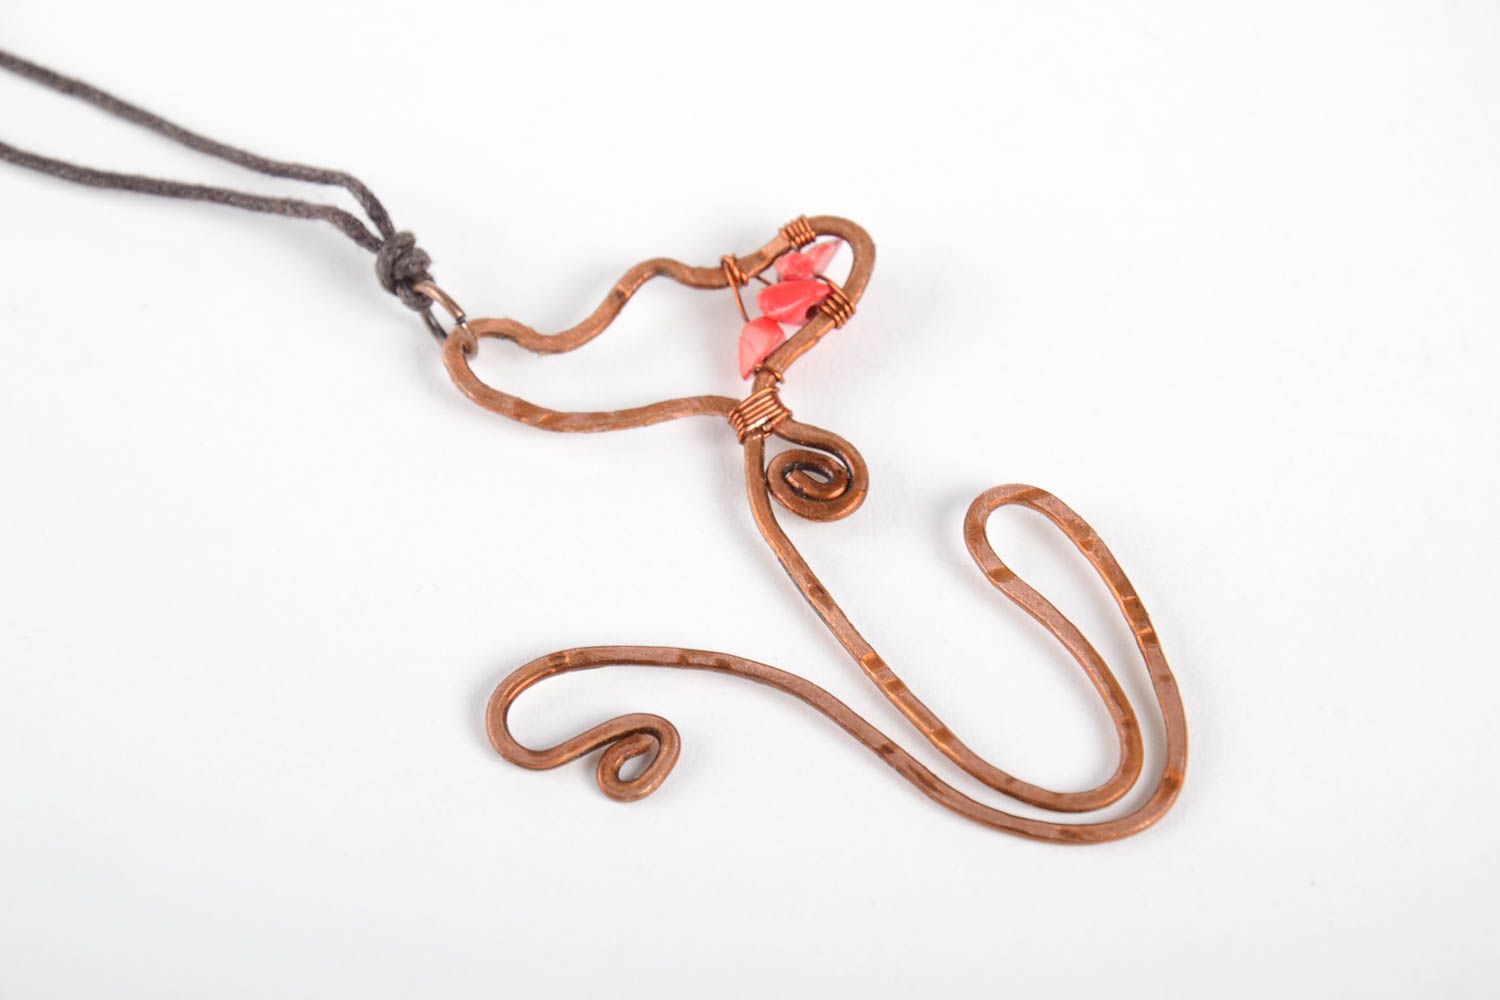 Handmade copper necklace designer pendant handmade jewelry with natural stones photo 3